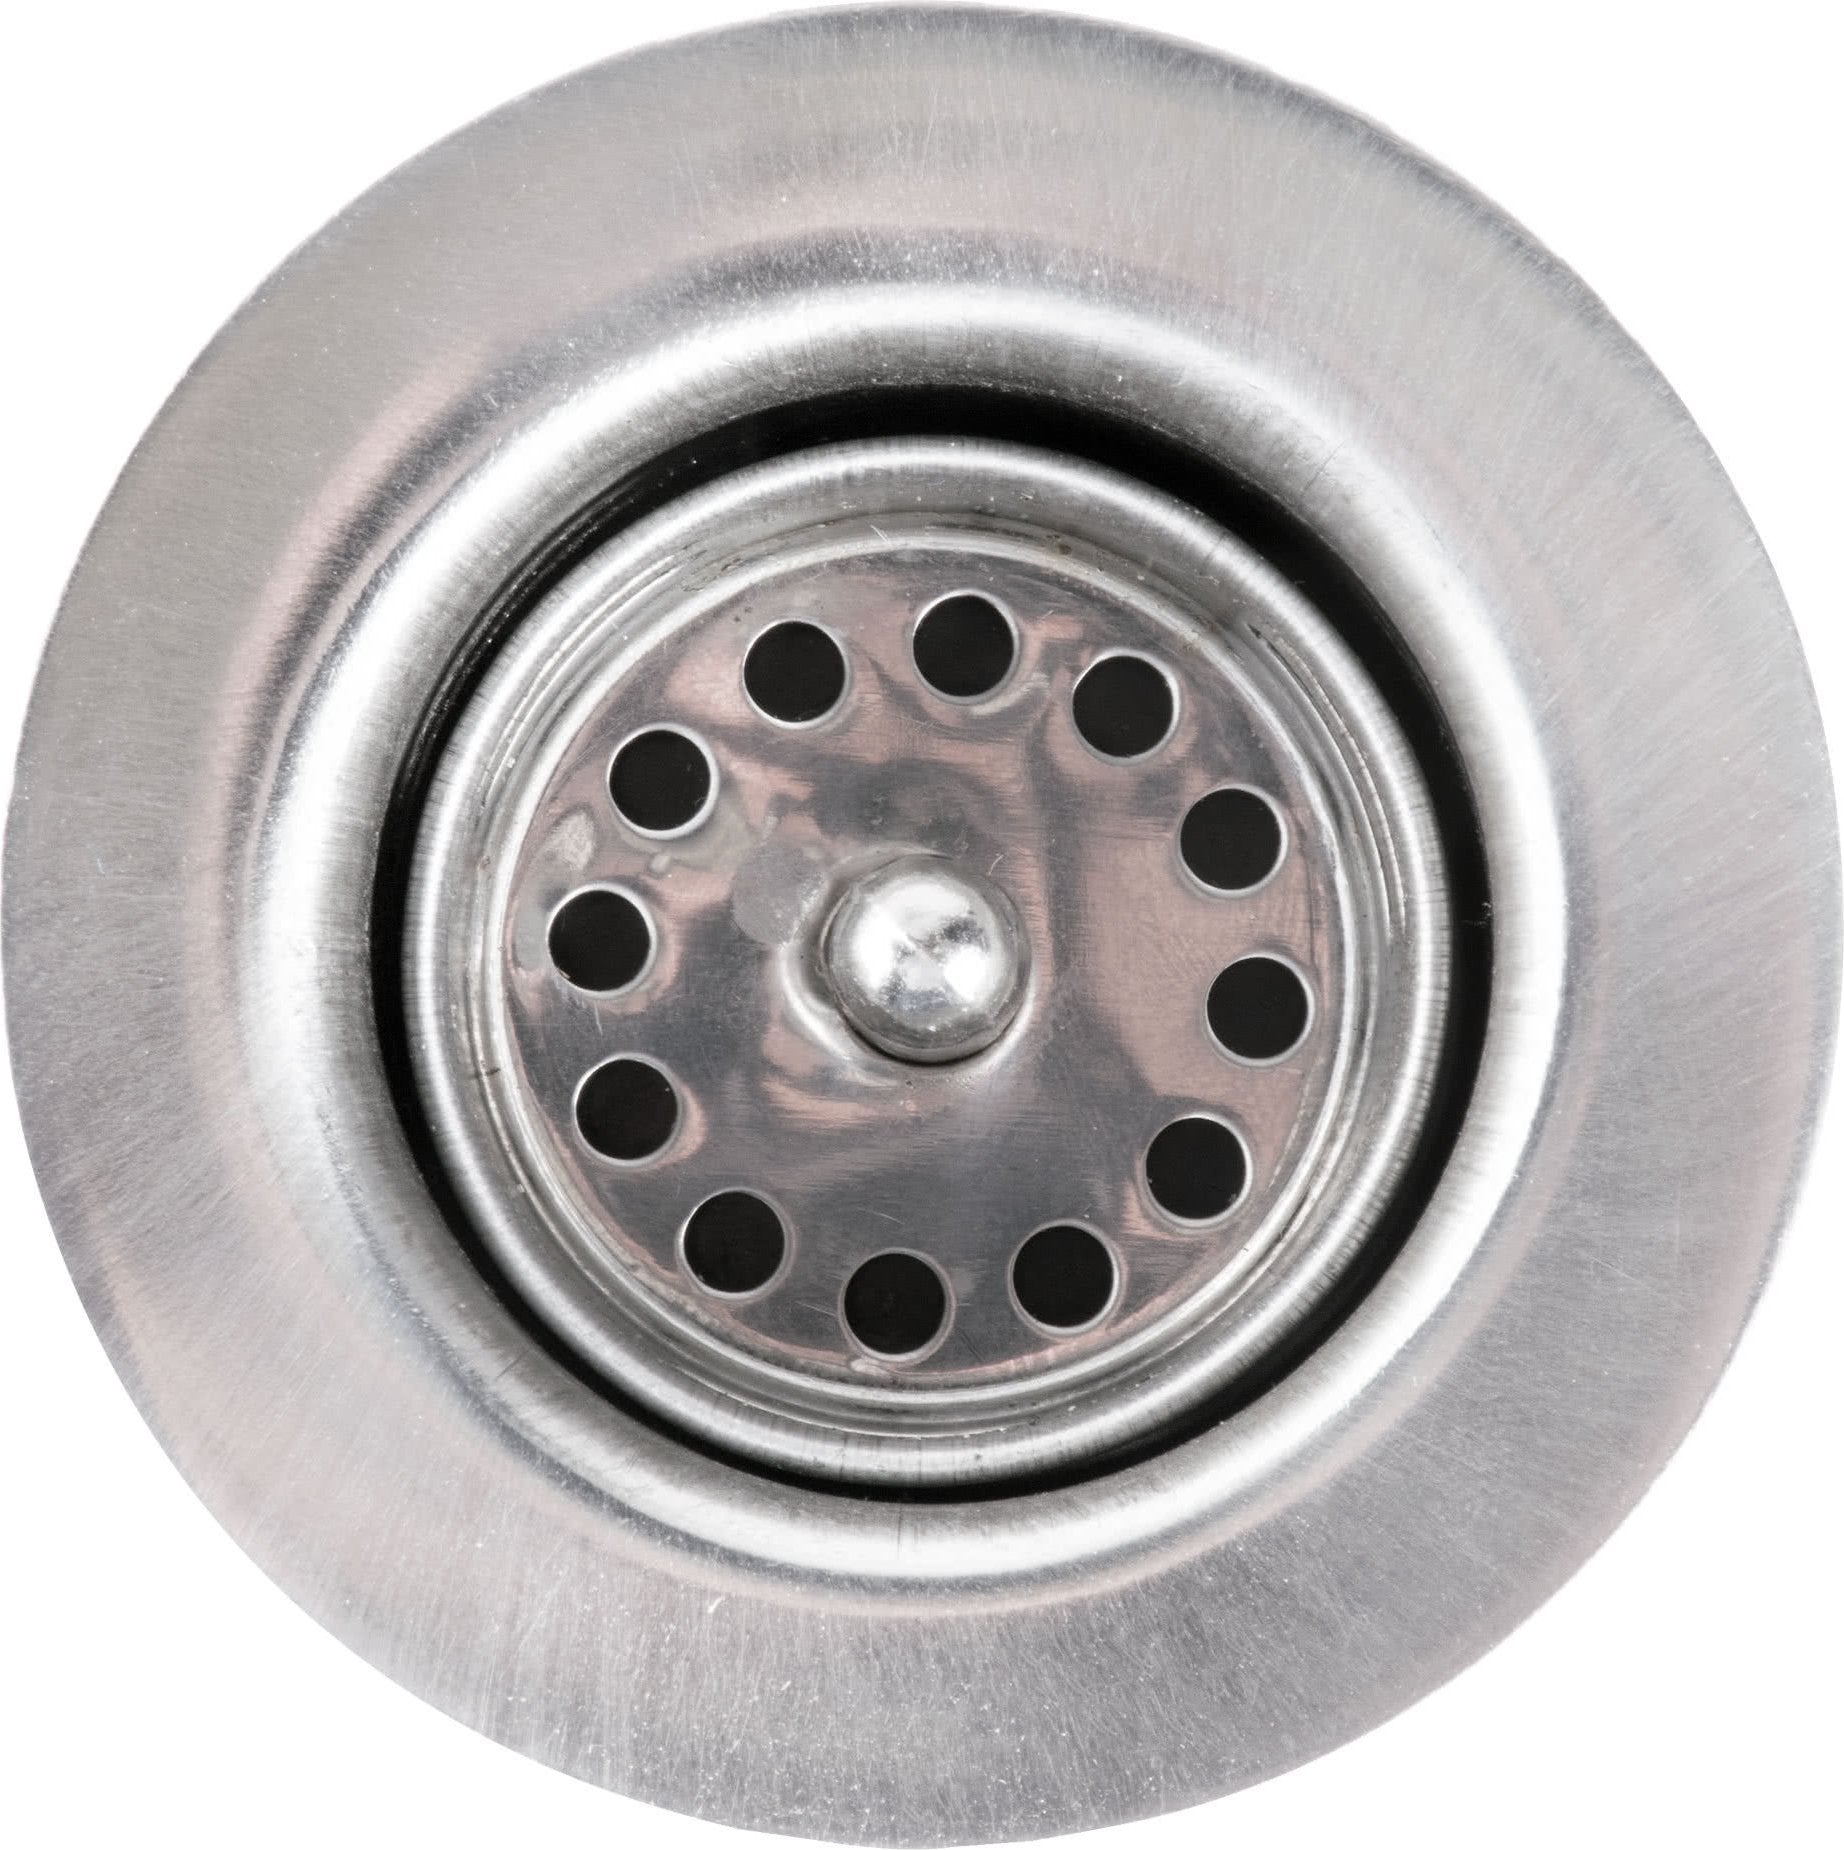 Omcan - Drain Plug For Hand Sink, 15/cs - 14337